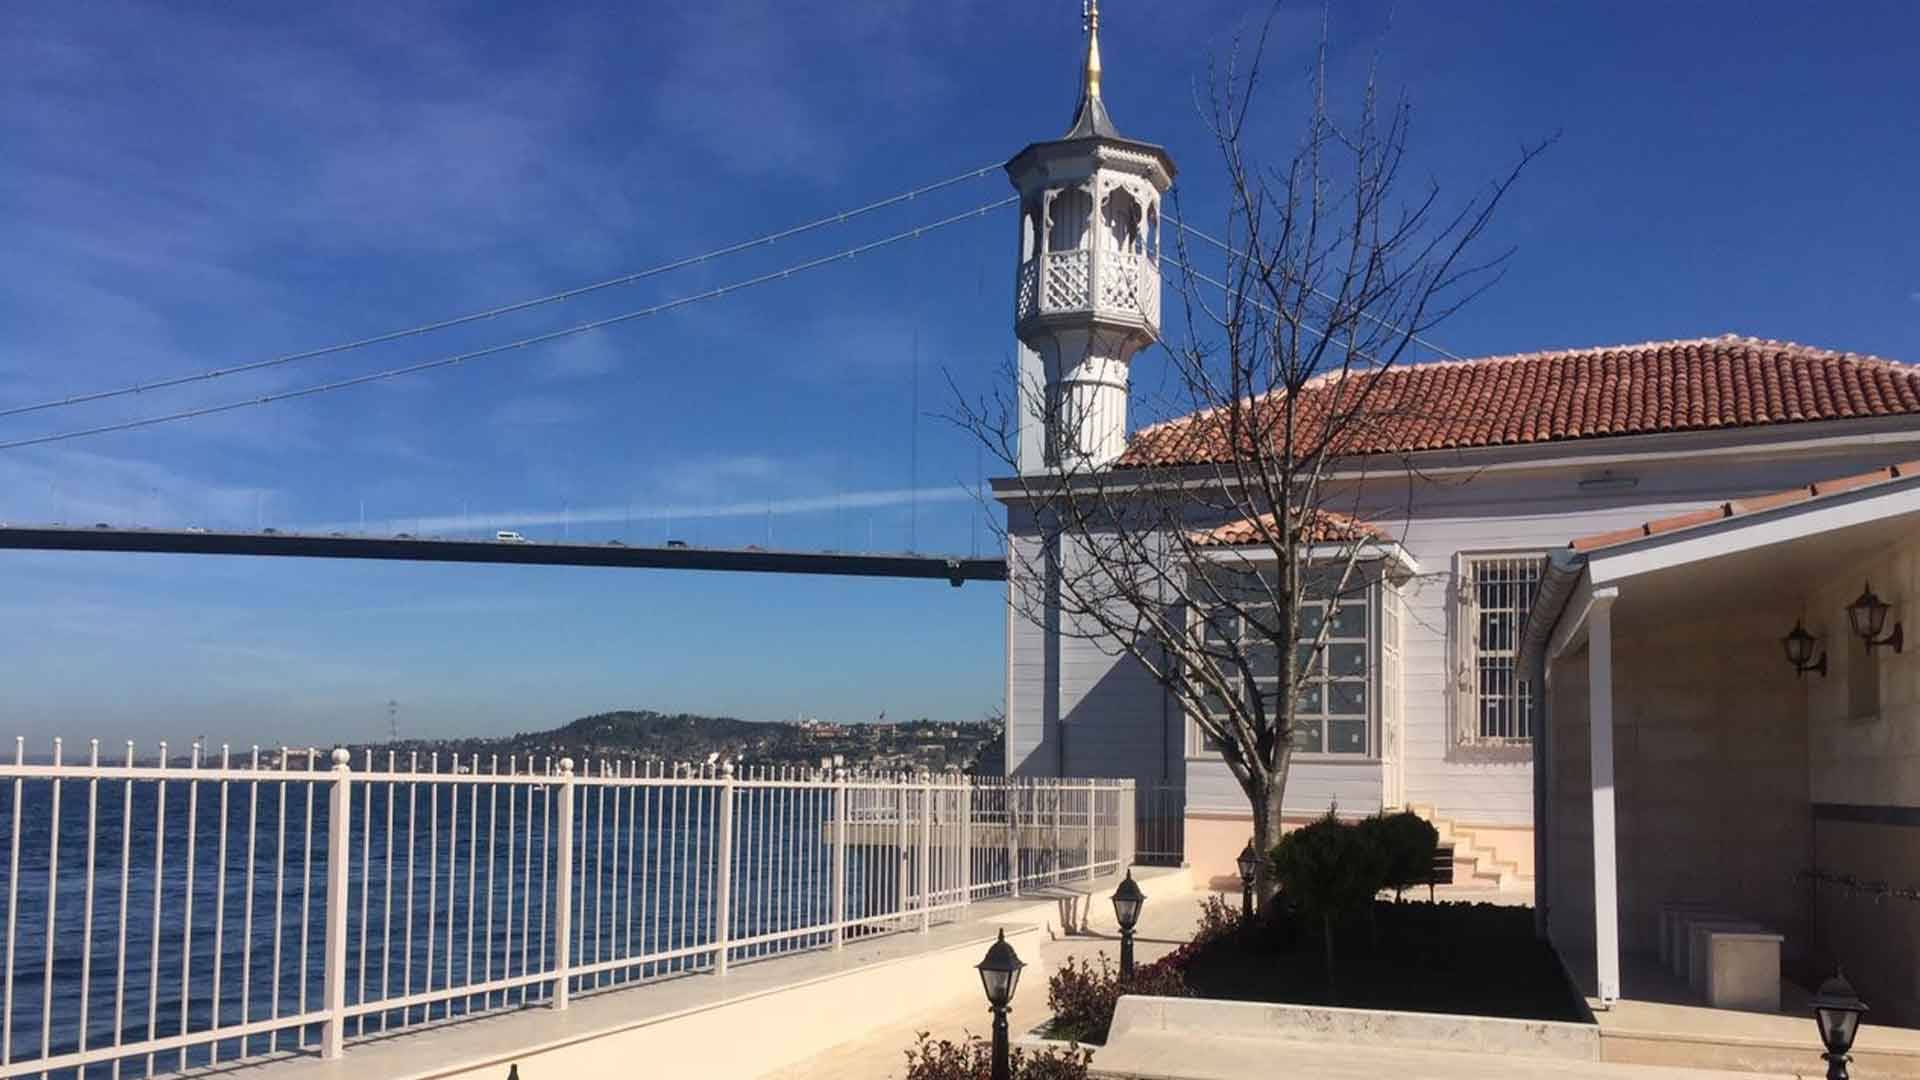 Üryanizade Ahmet Esat Efendi Camii